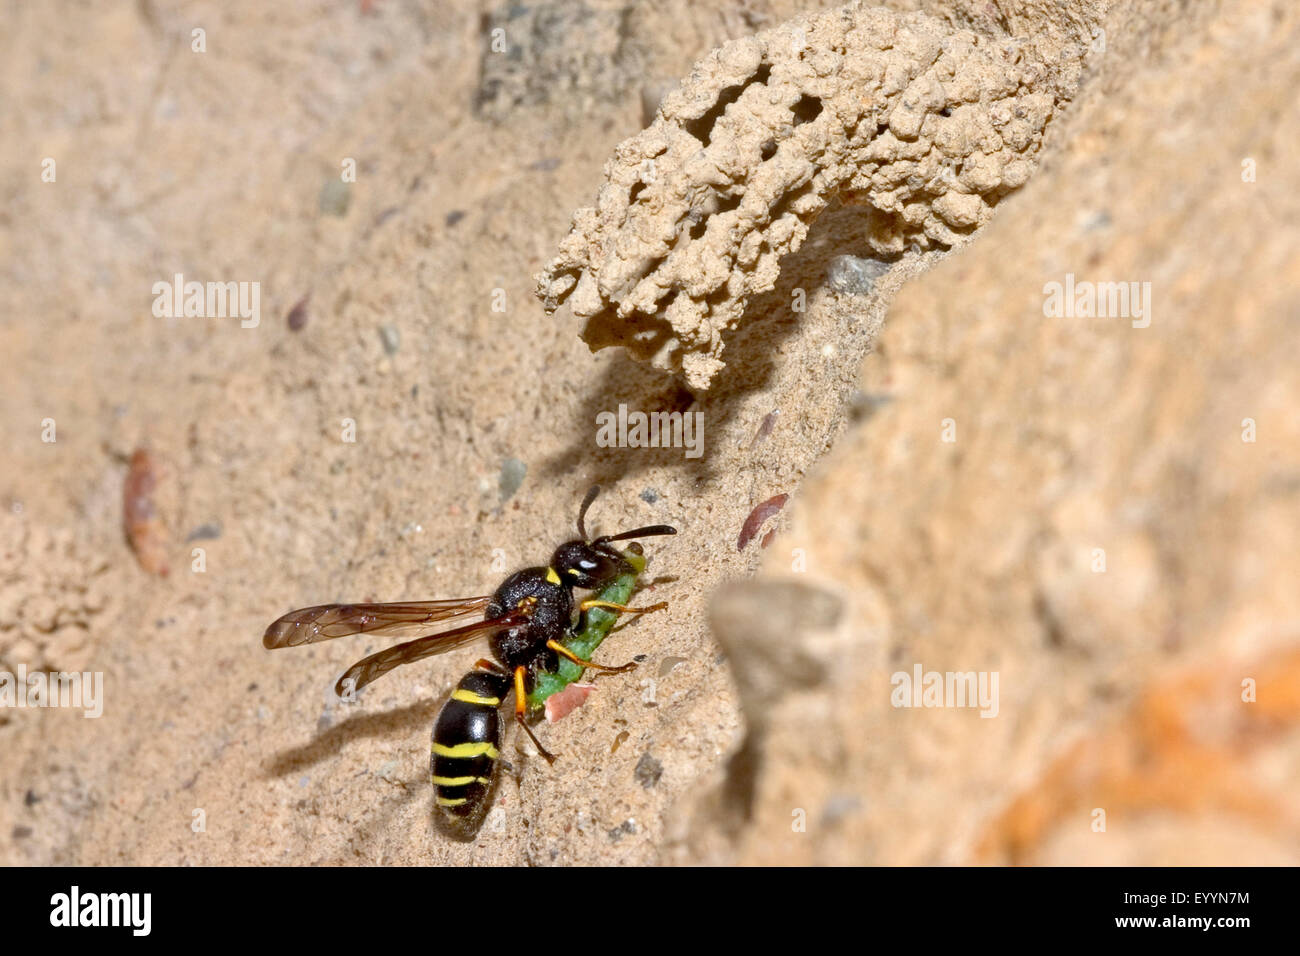 Potter wasp (Odynerus spinipes, Oplomerus spinipes), porta un catturato larva di nido, Germania Foto Stock